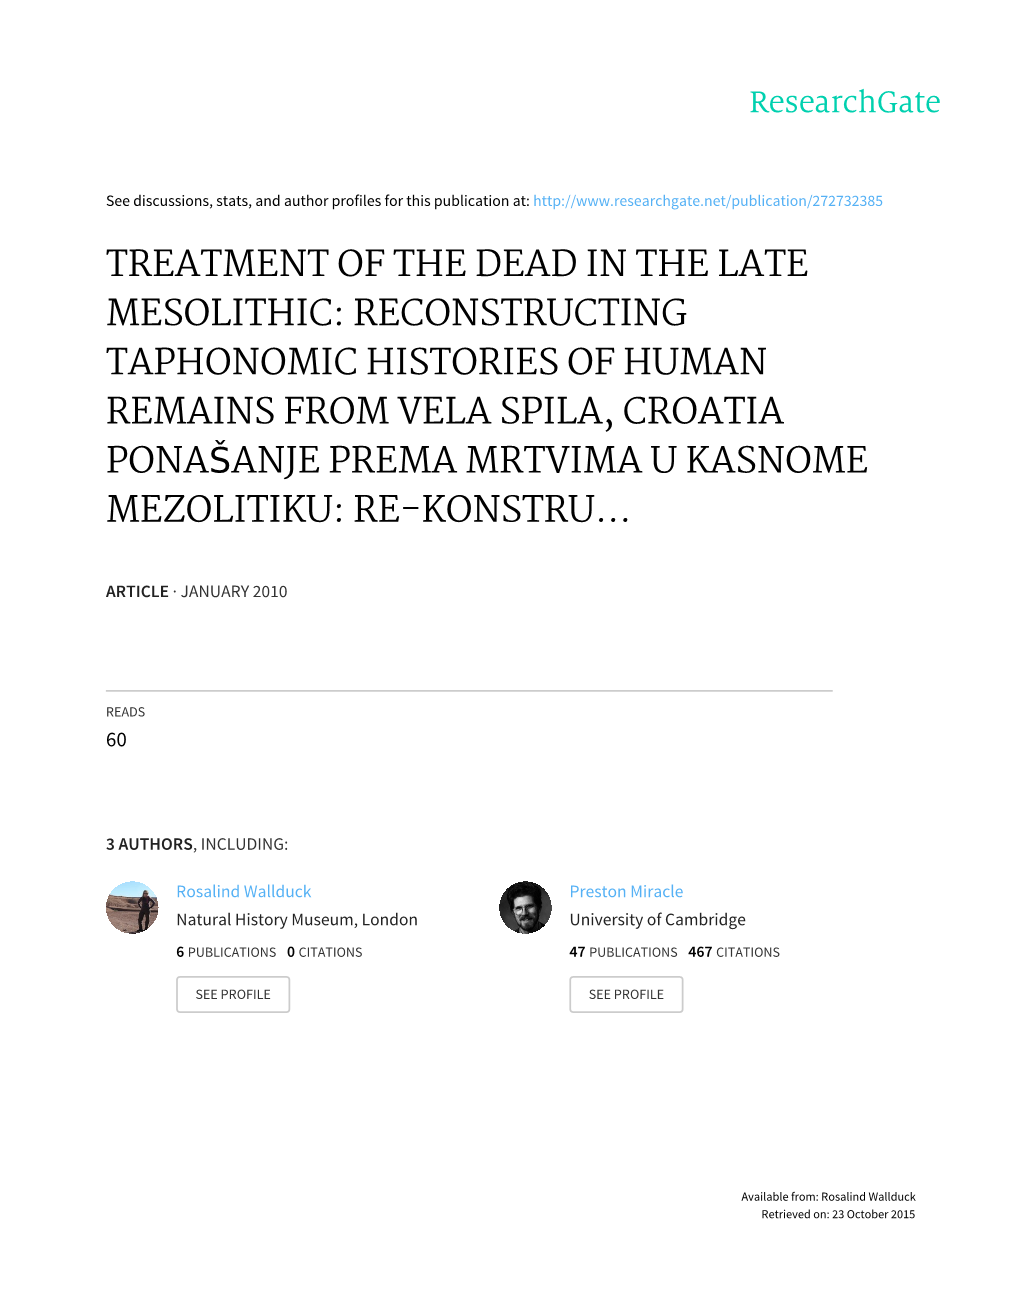 Reconstructing Taphonomic Histories of Human Remains from Vela Spila, Croatia Ponašanje Prema Mrtvima U Kasnome Mezolitiku: Re-Konstru